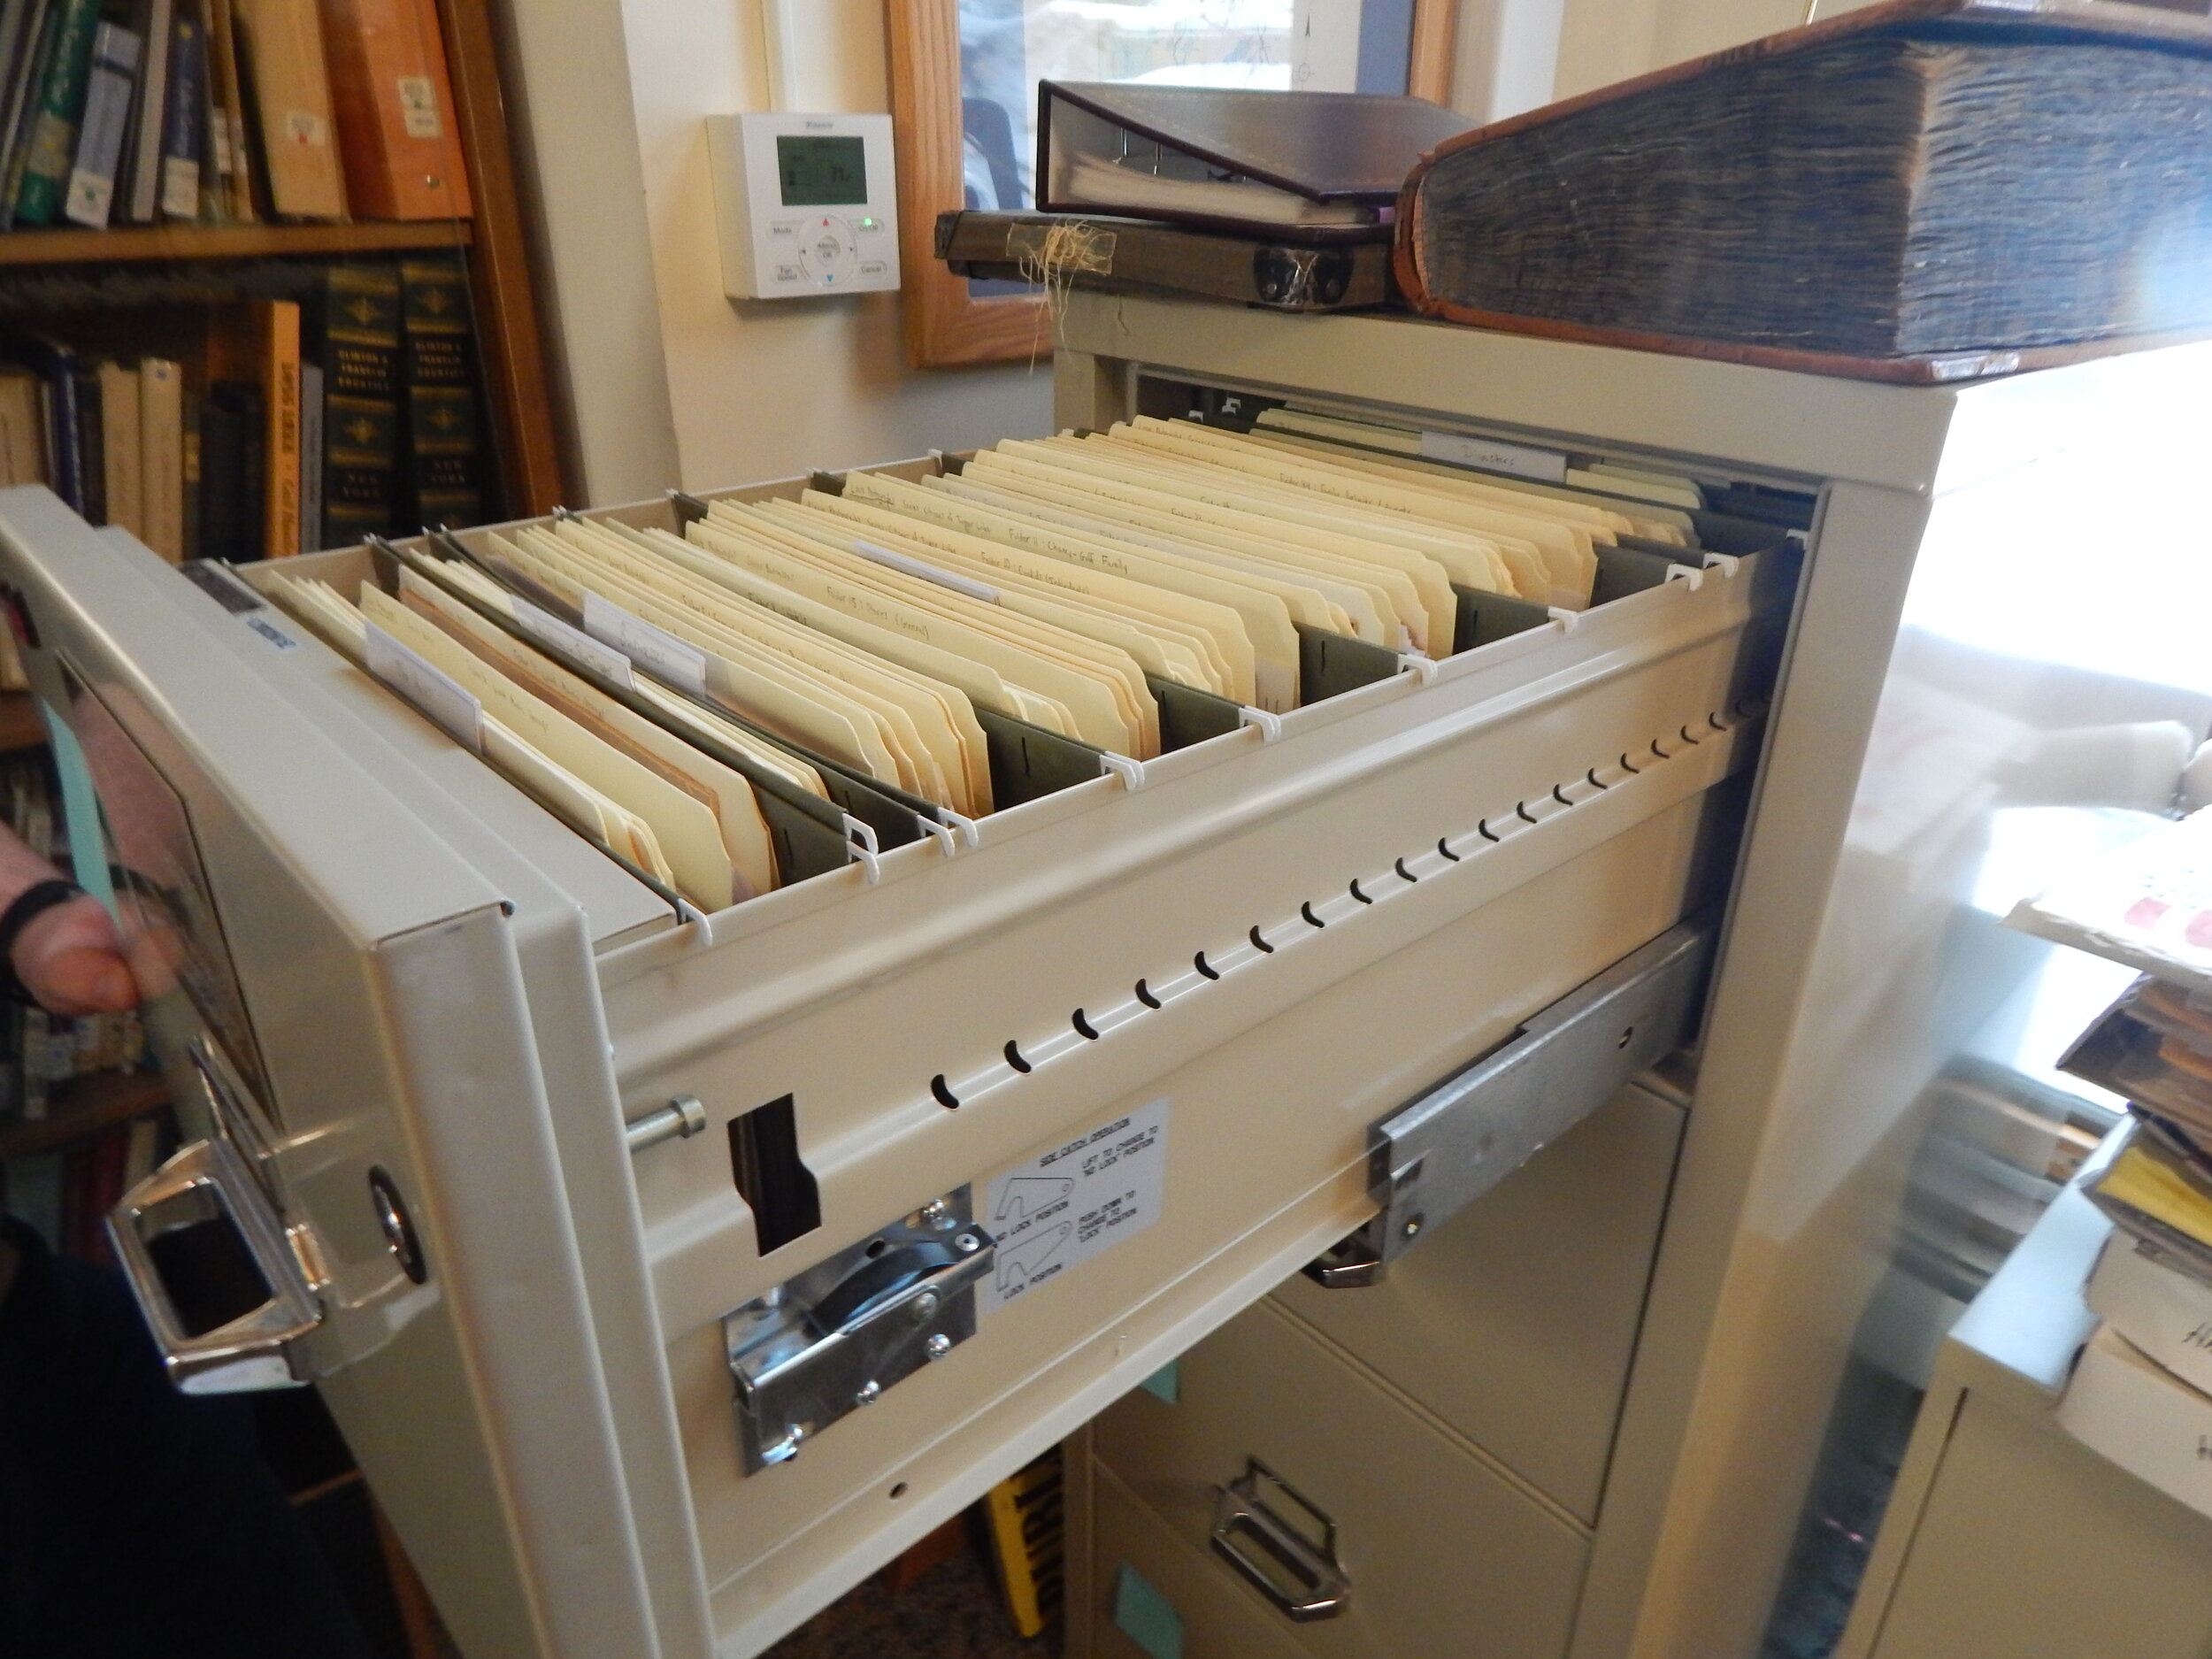    A cabinet full of filed photographs regarding Tupper Lake history.    